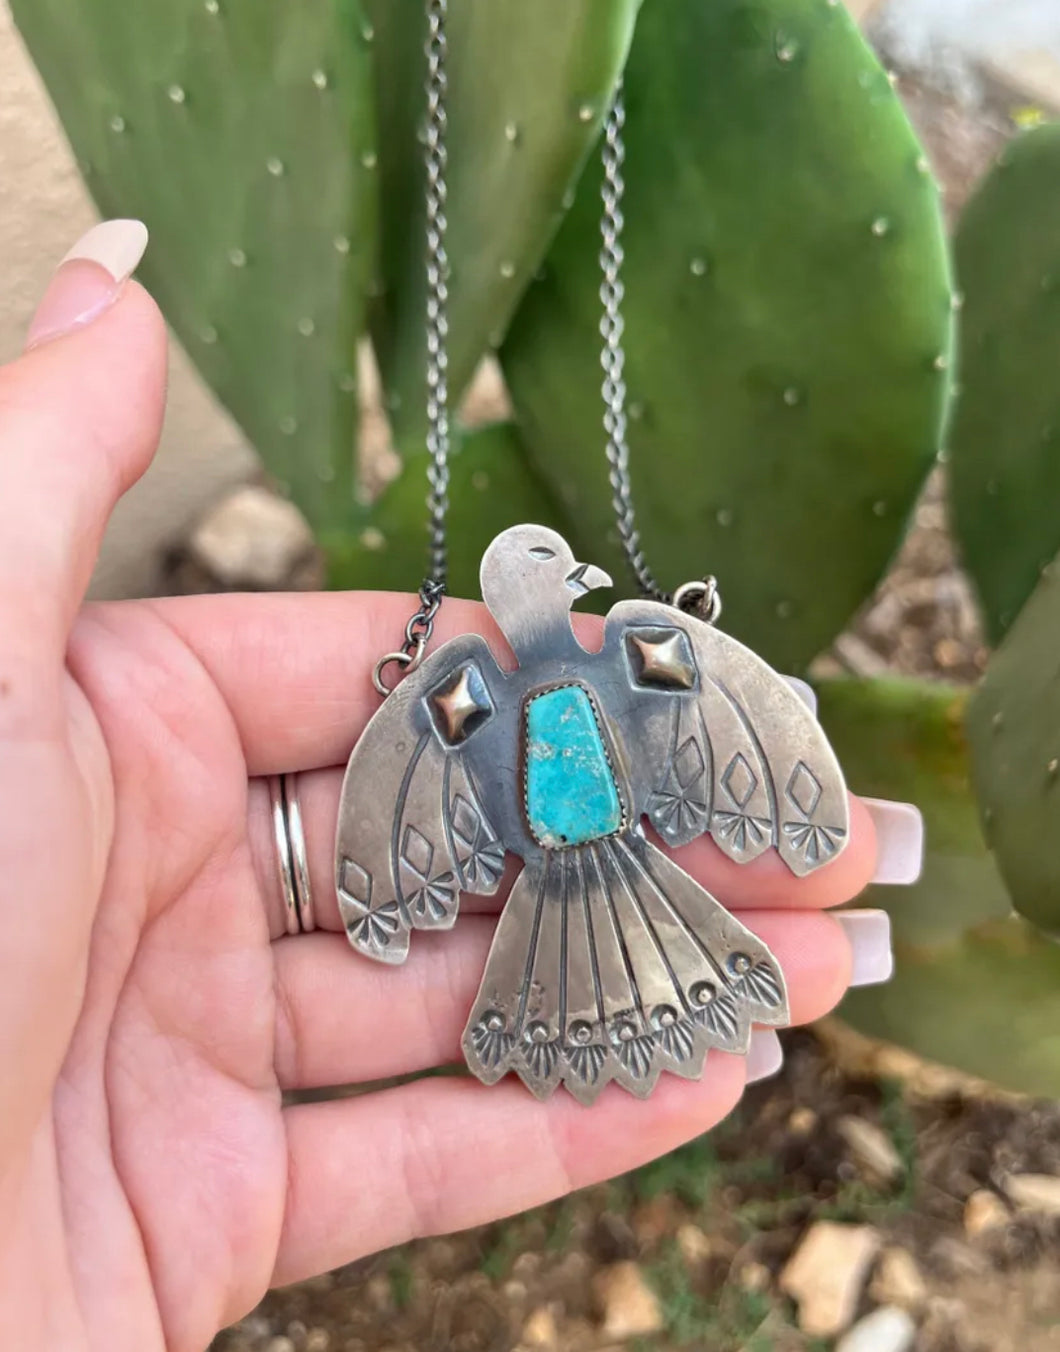 The Thunderbird Necklace